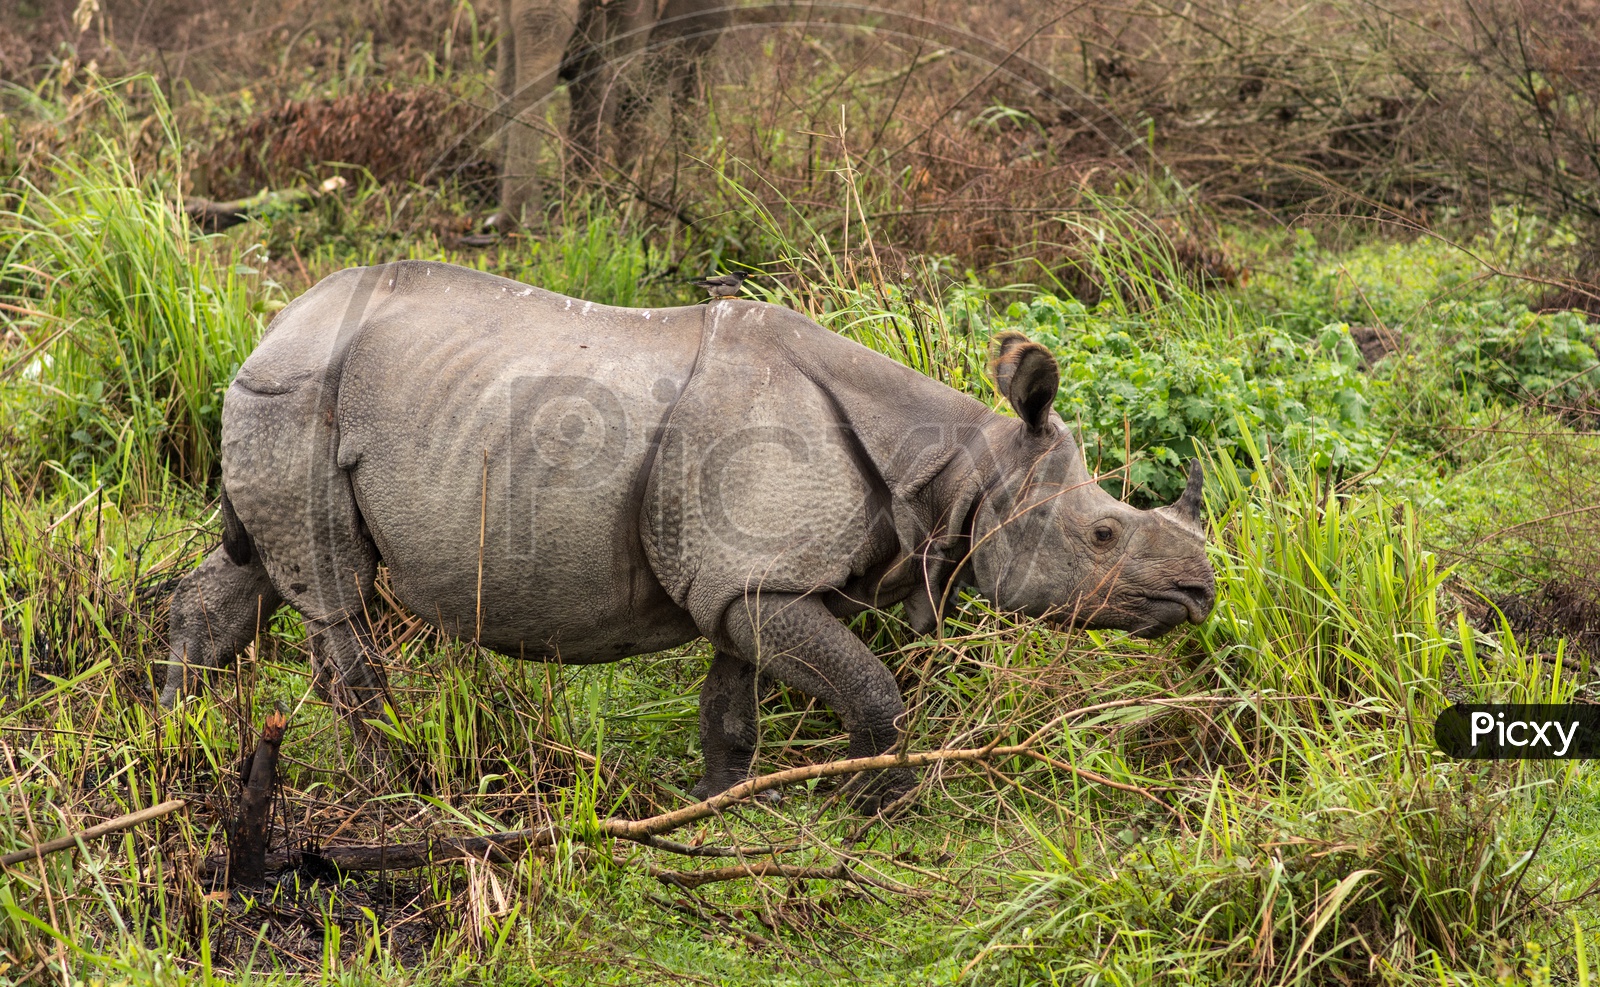 One horned rhinoceros in the wild